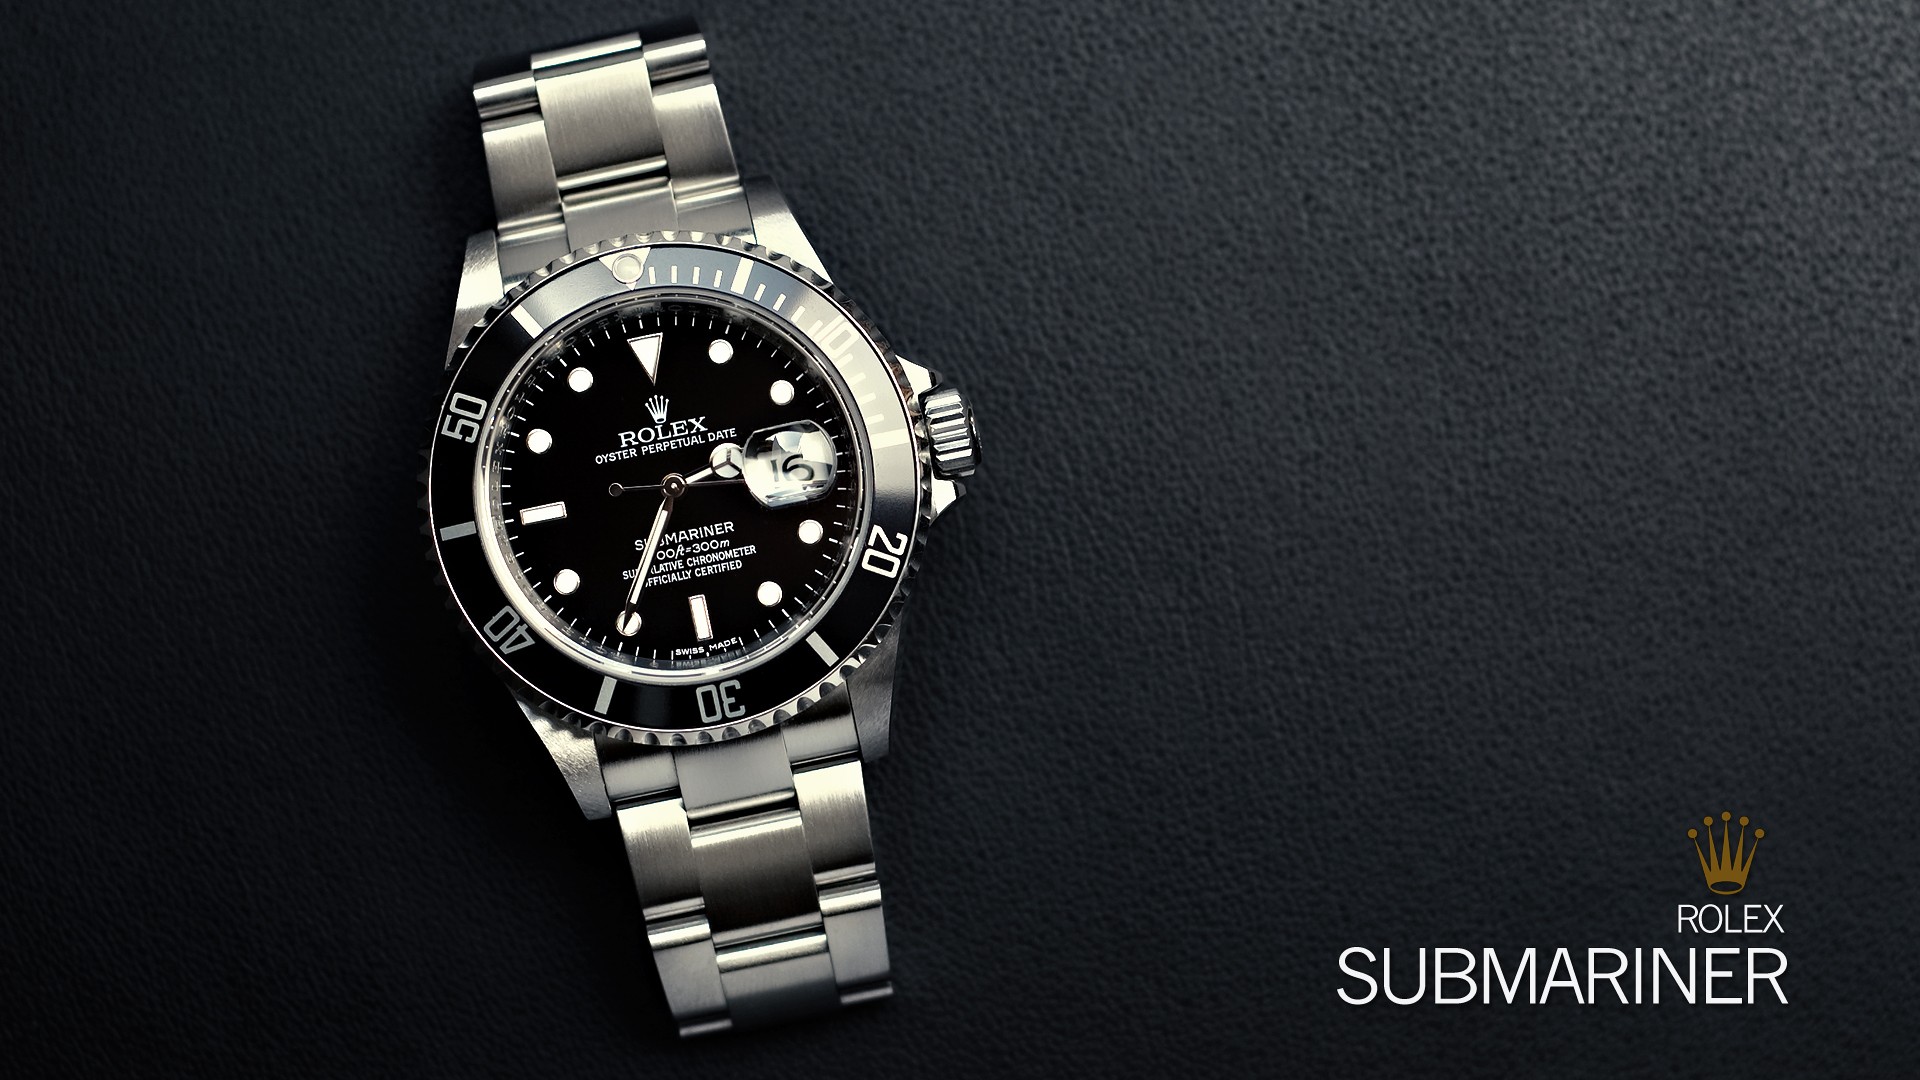 Rolex Submariner Swiss Made Watch HD Image Brands Ads